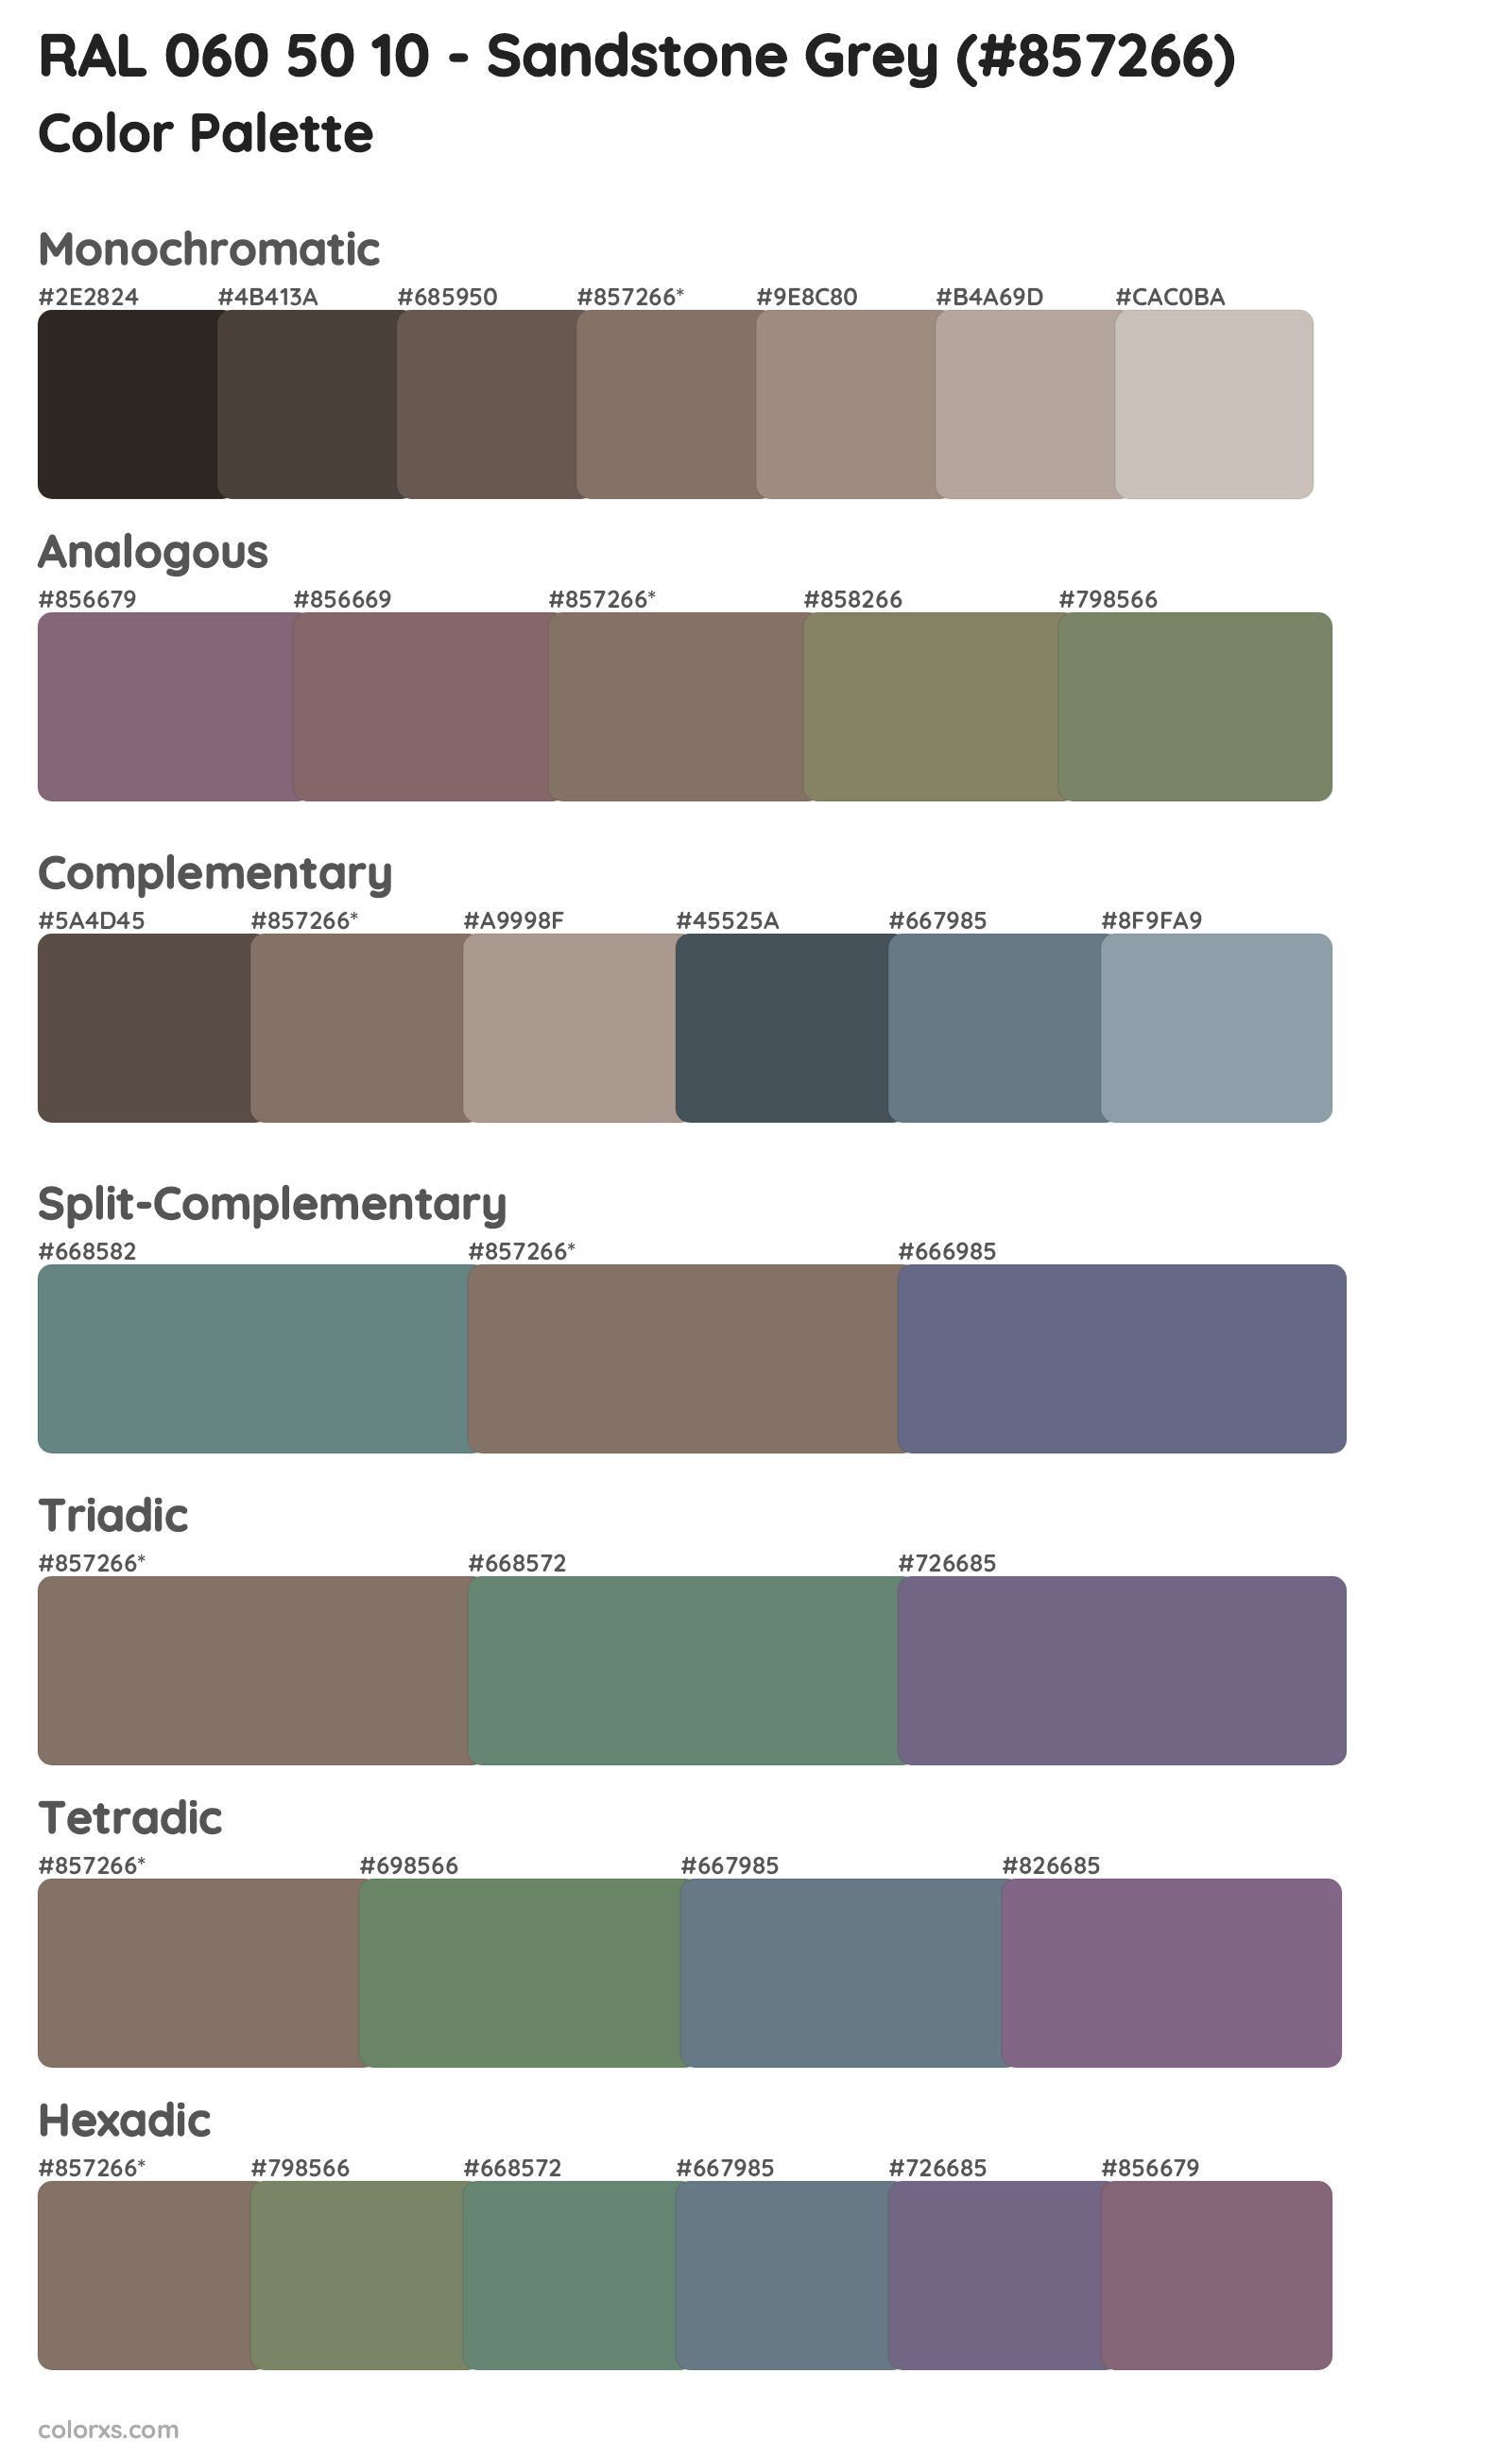 RAL 060 50 10 - Sandstone Grey Color Scheme Palettes